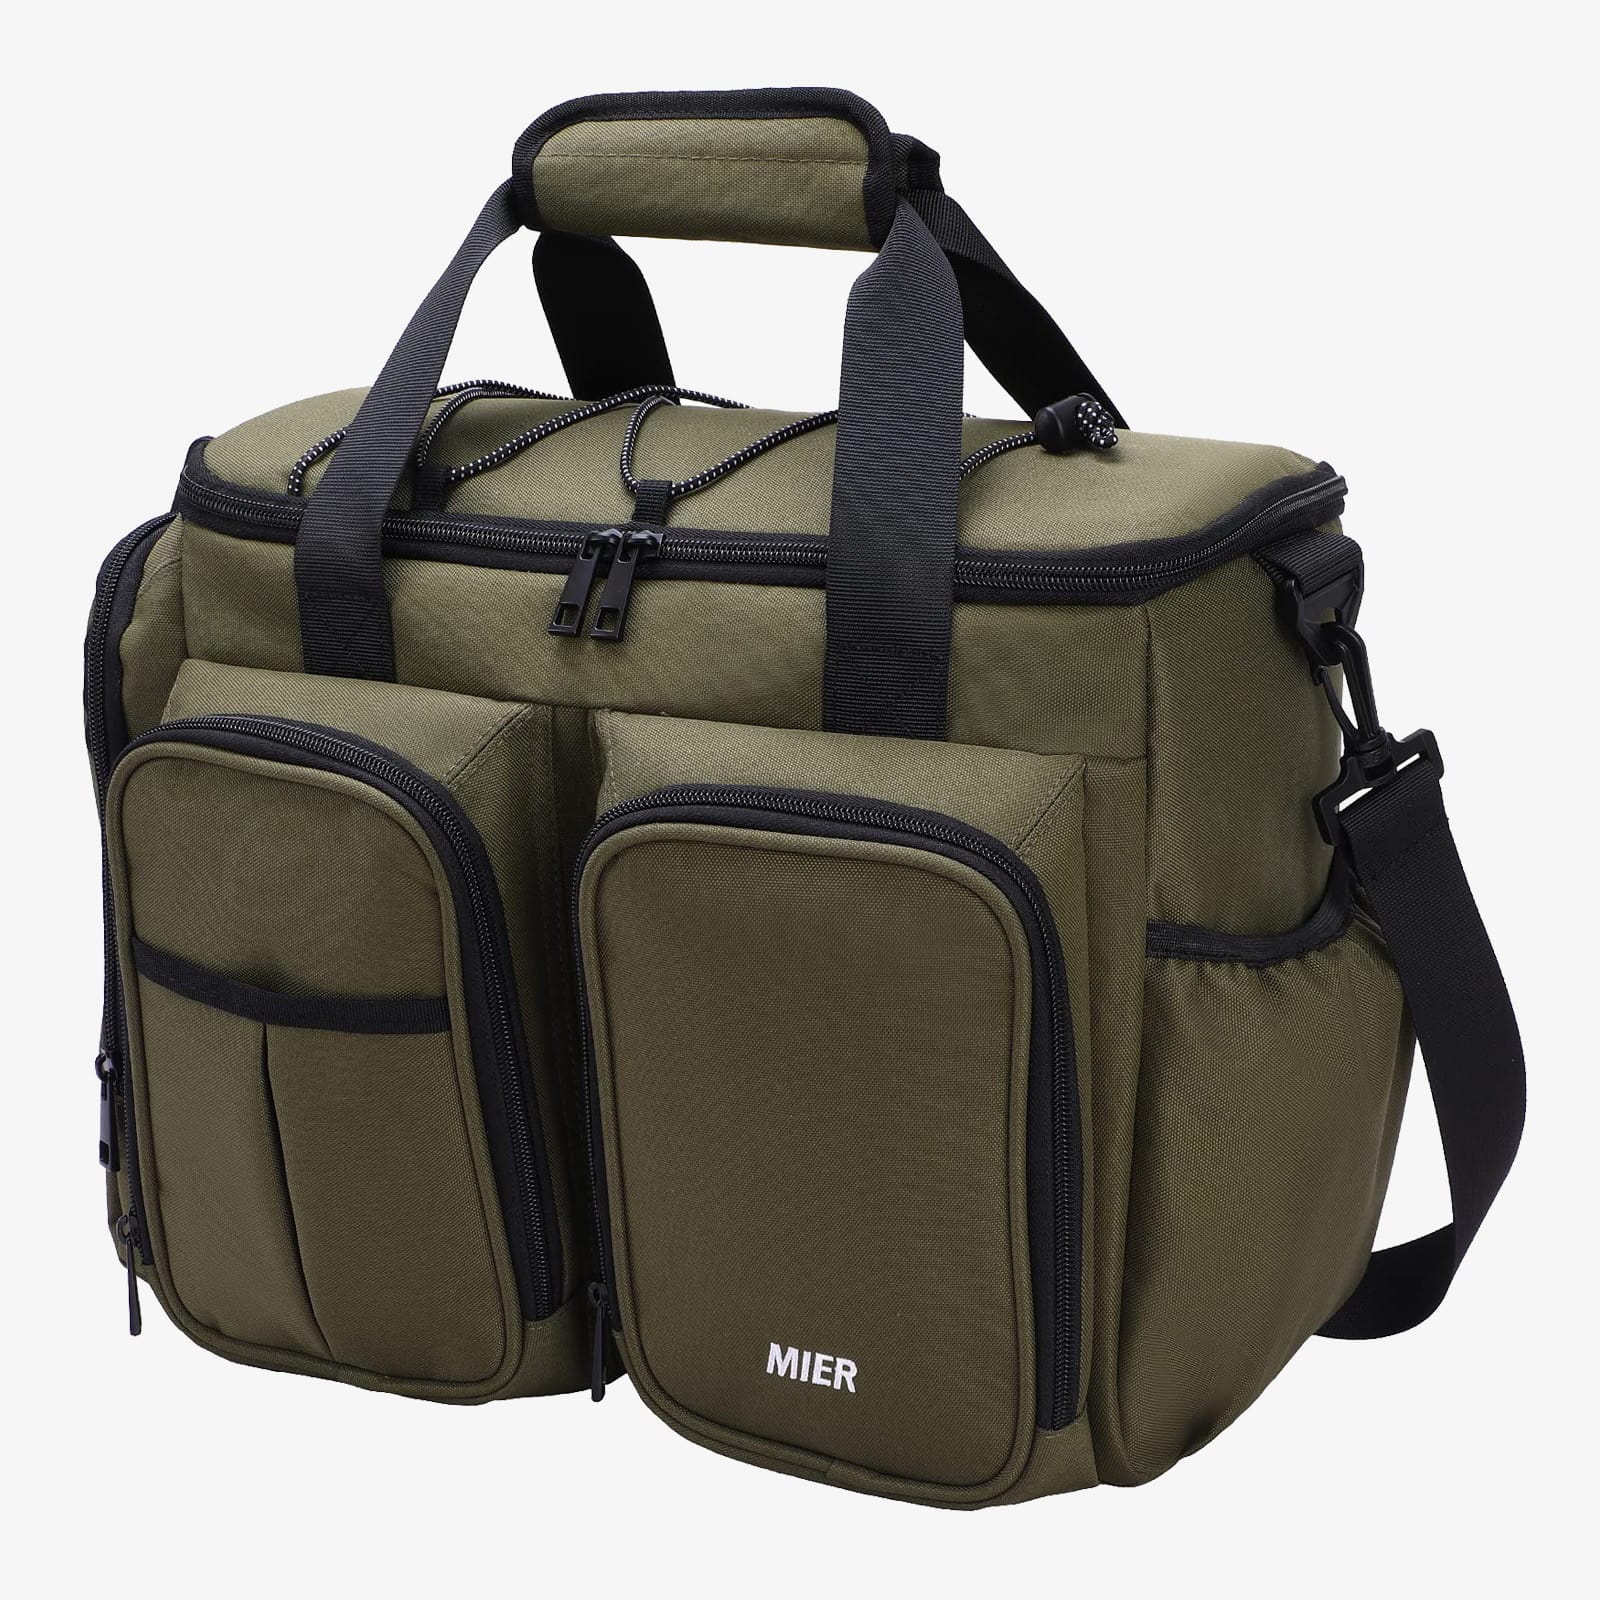 Explorer Wildland -Realtree Like- Hunting Camo Multi-Functional Tactical  Messenger Bag - Documents Bag- Multiple Pocket & Compartments